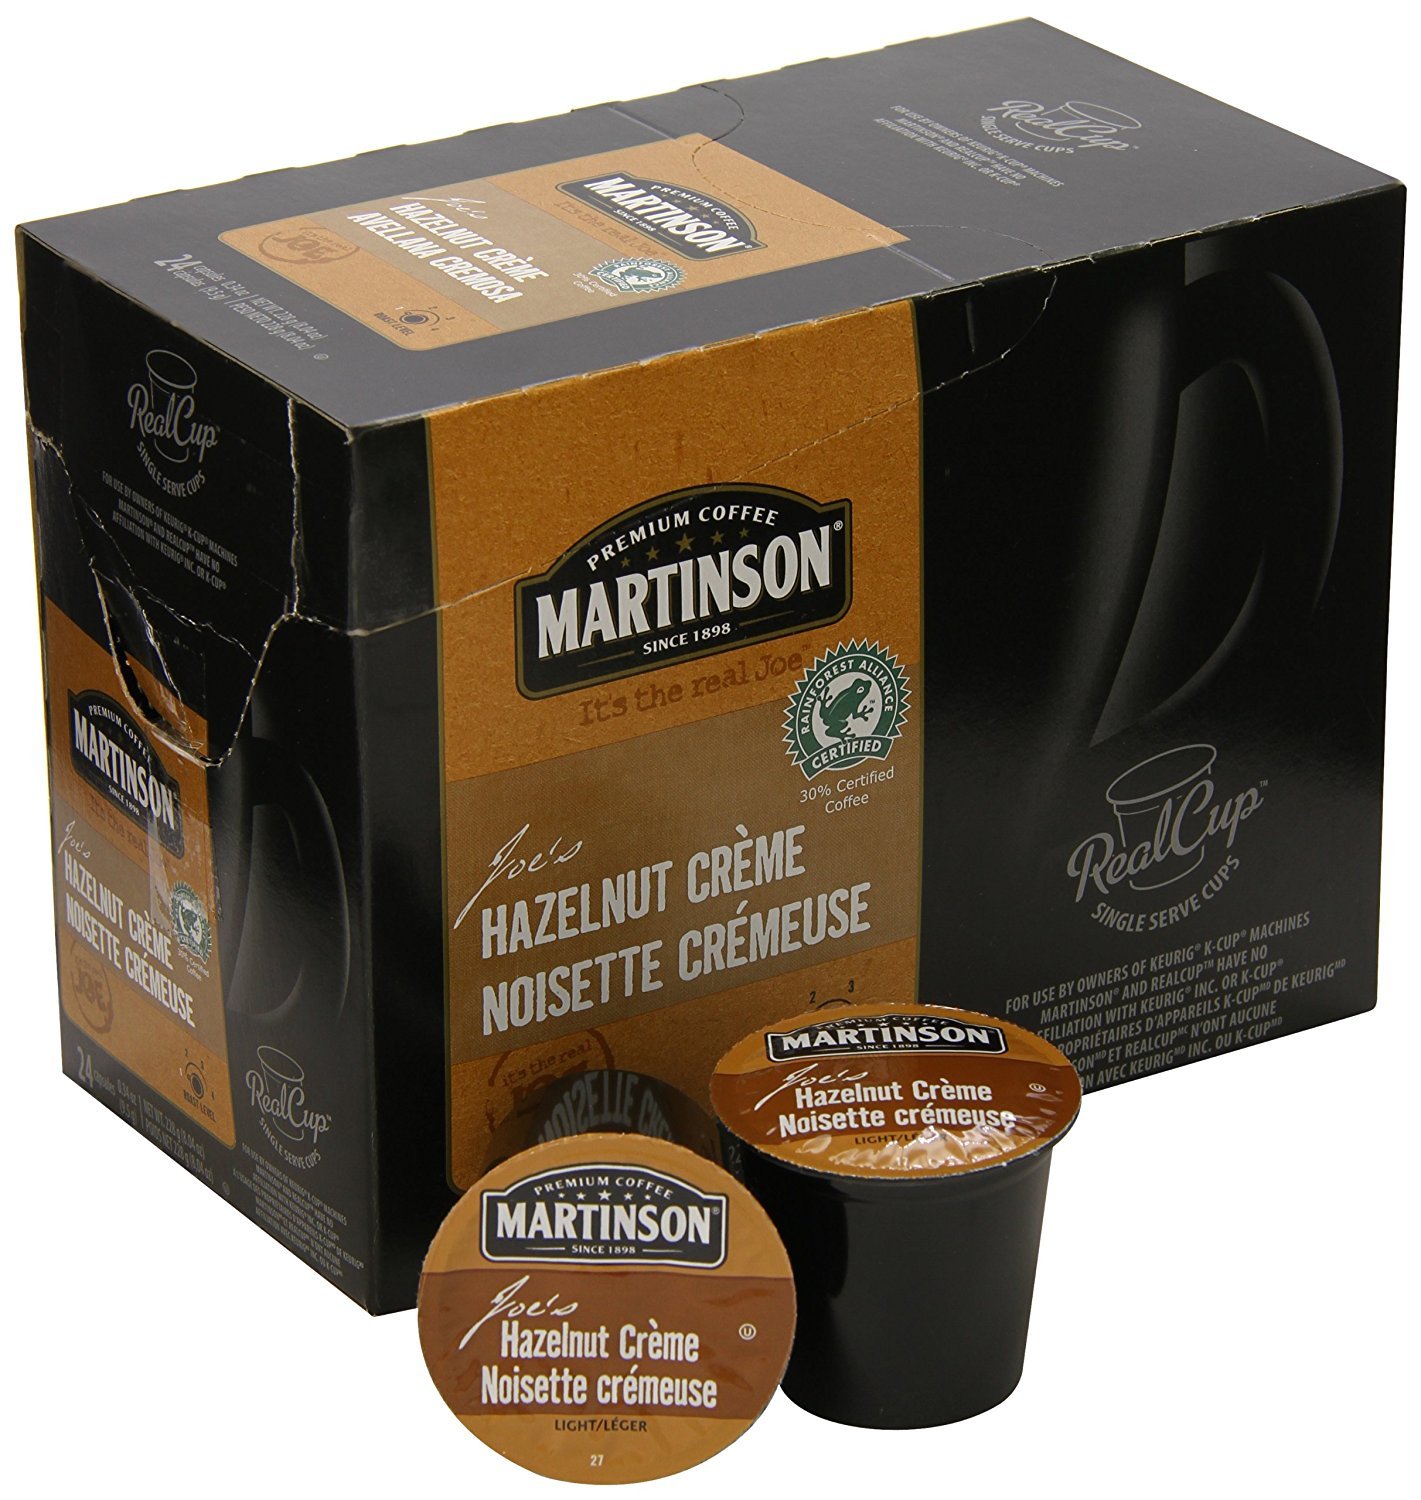 Martinson Joe's Hazelnut Crème Single Serve Coffee (24 Pack)